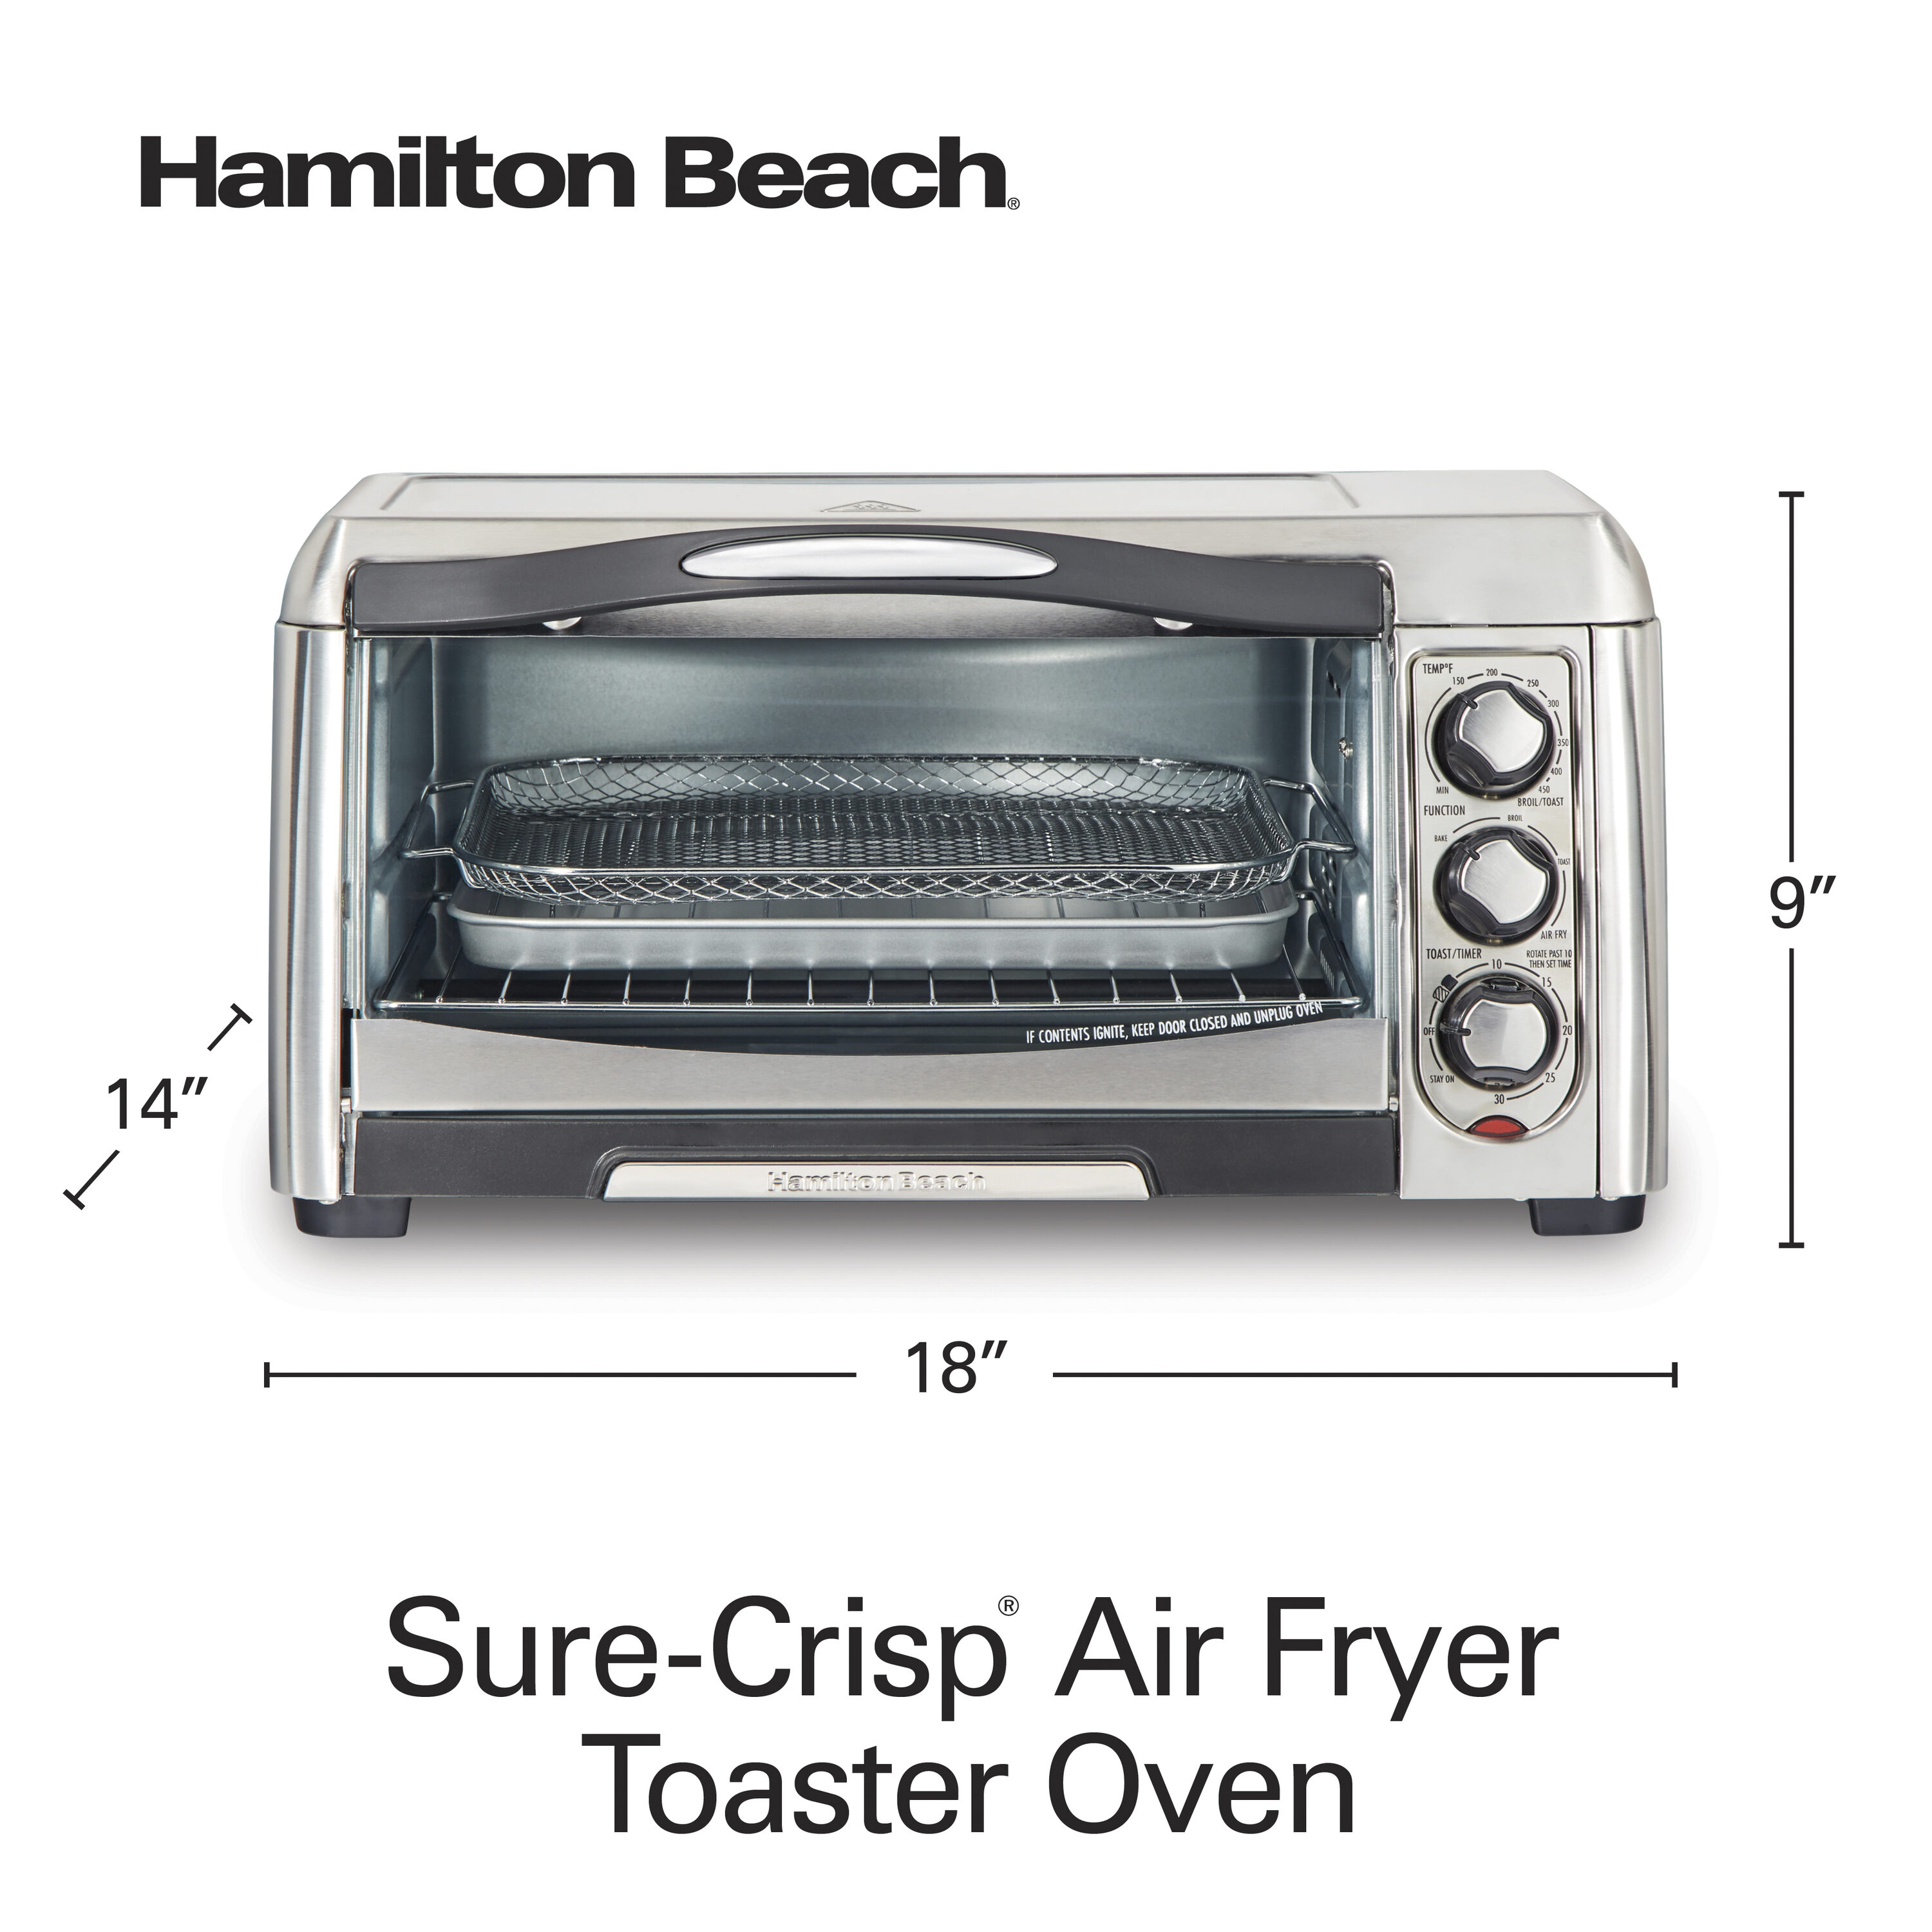 Hamilton Beach Sure-Crisp Air Fryer Toaster Oven,3 Rack ,1500